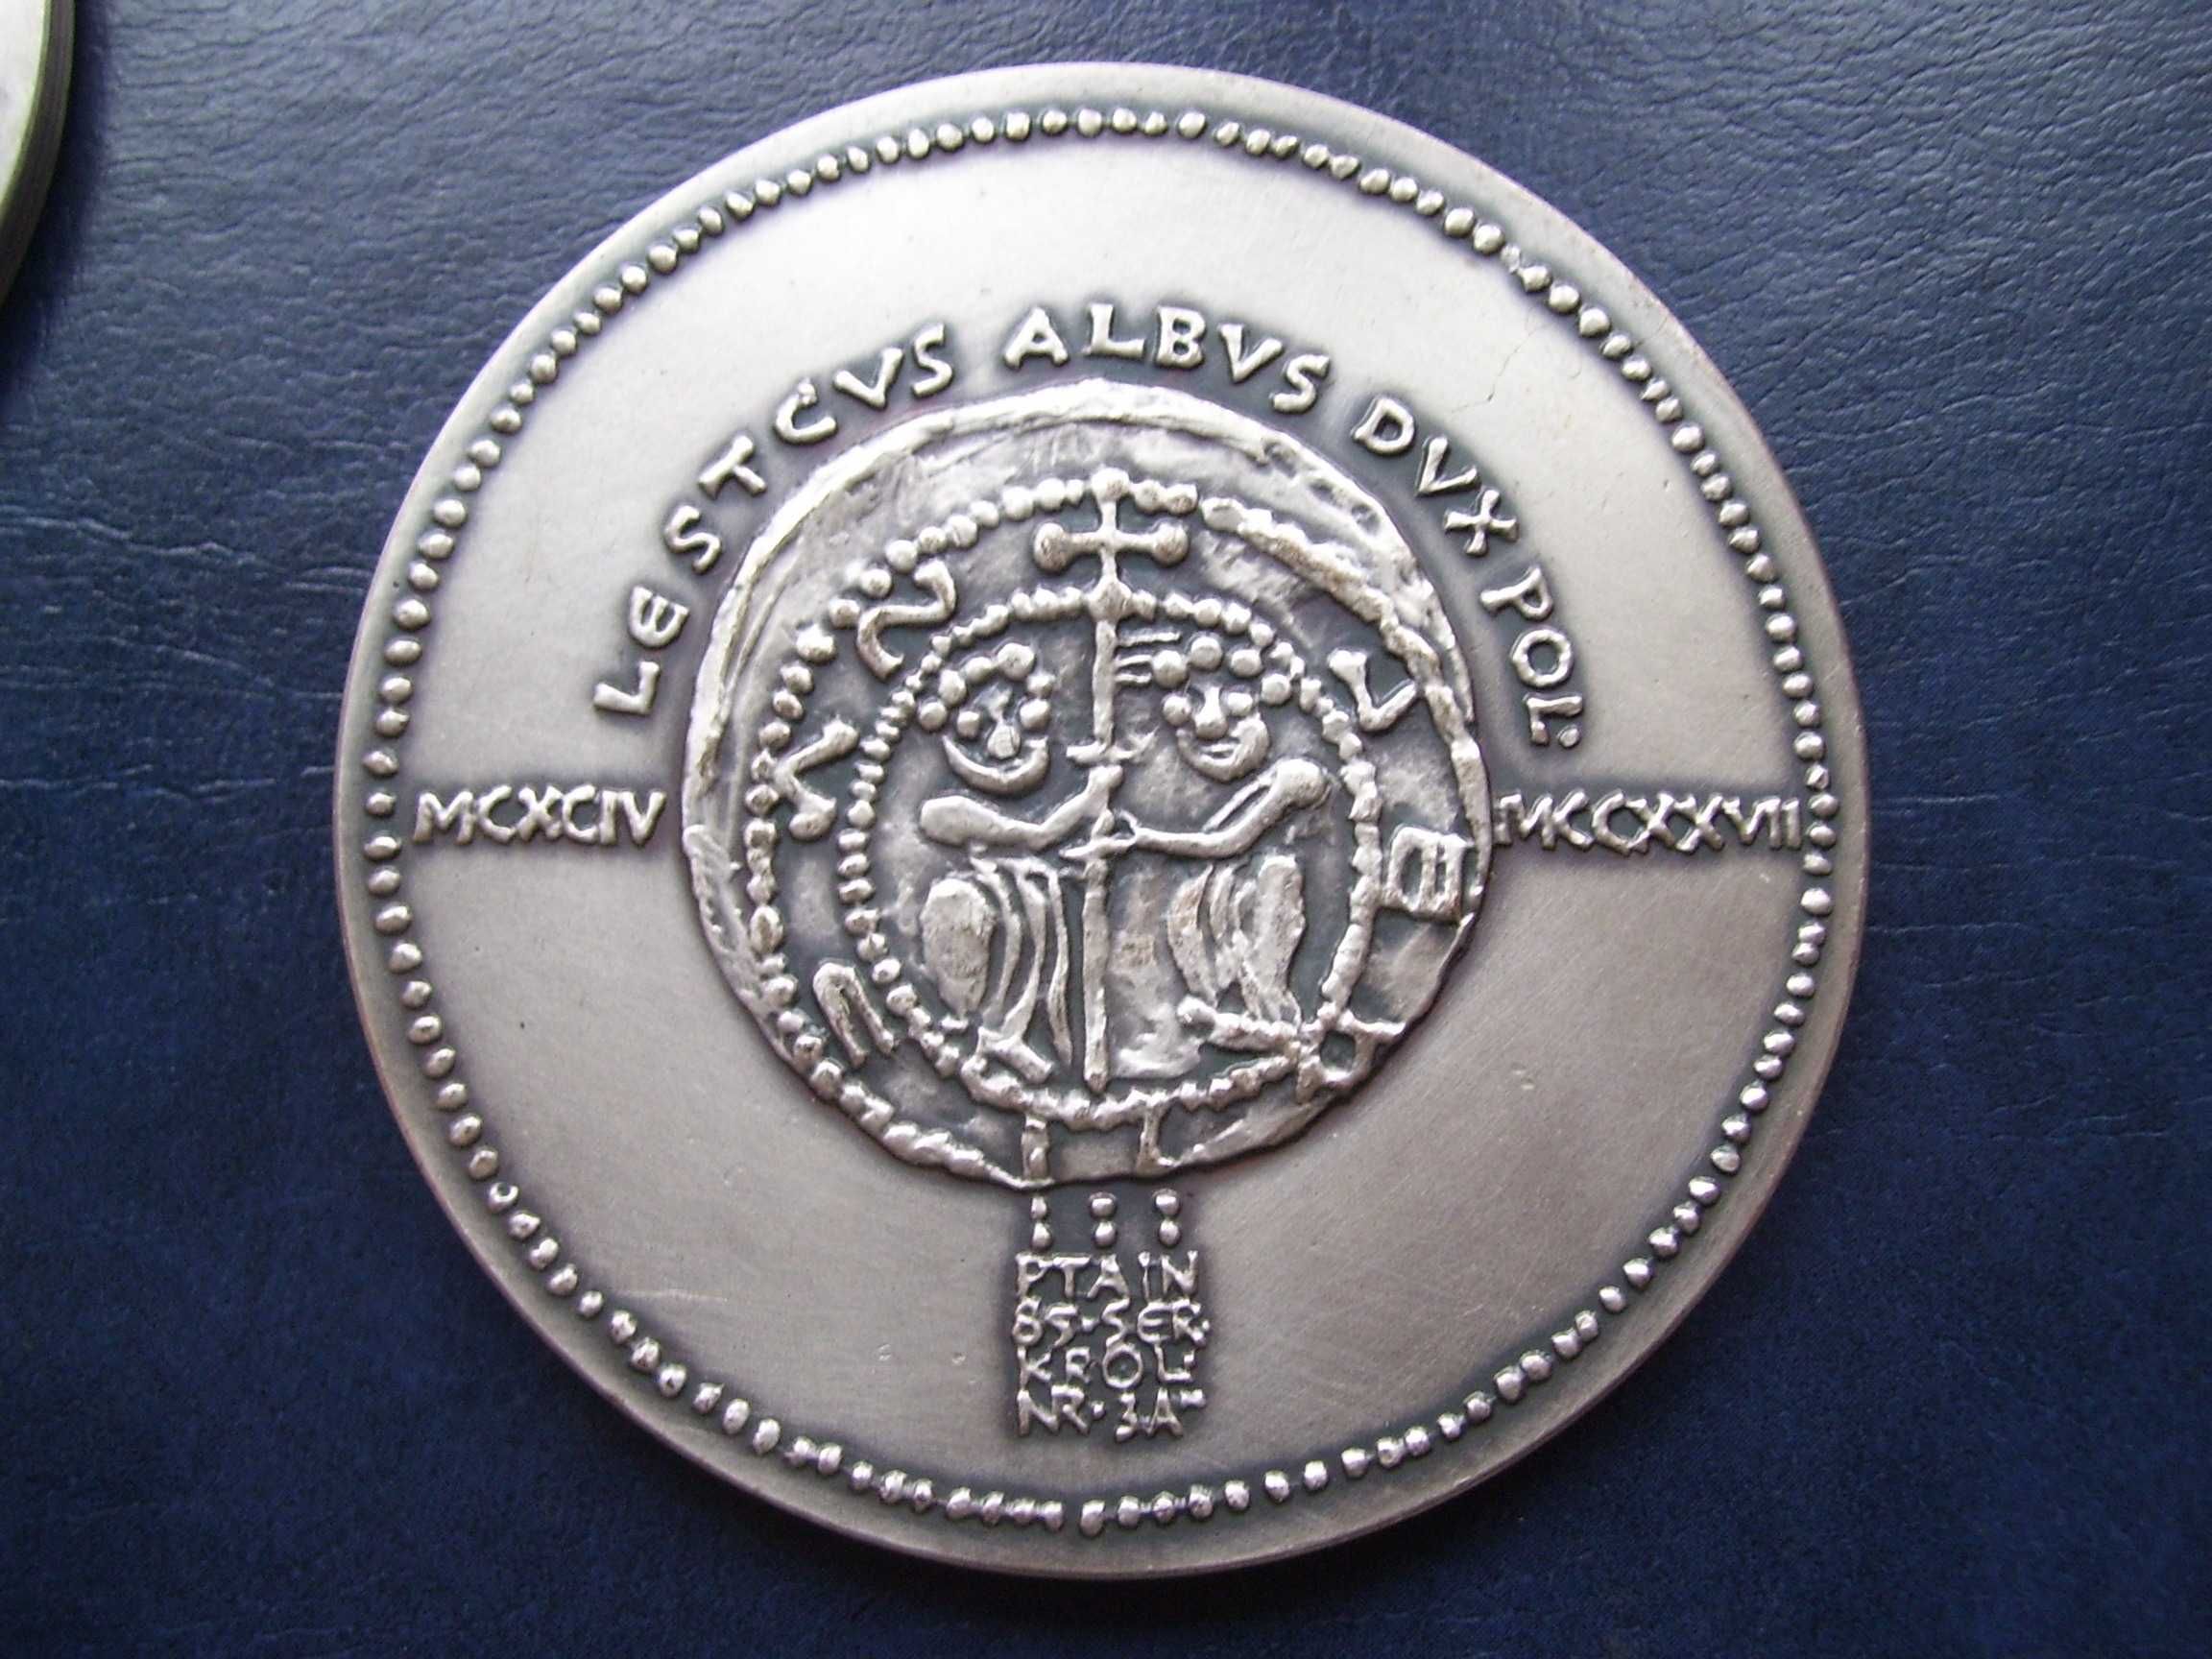 Stare monety Lestcvs Albvs Dvs Polii Pivc Seria Królewska 70 mm PTAiN